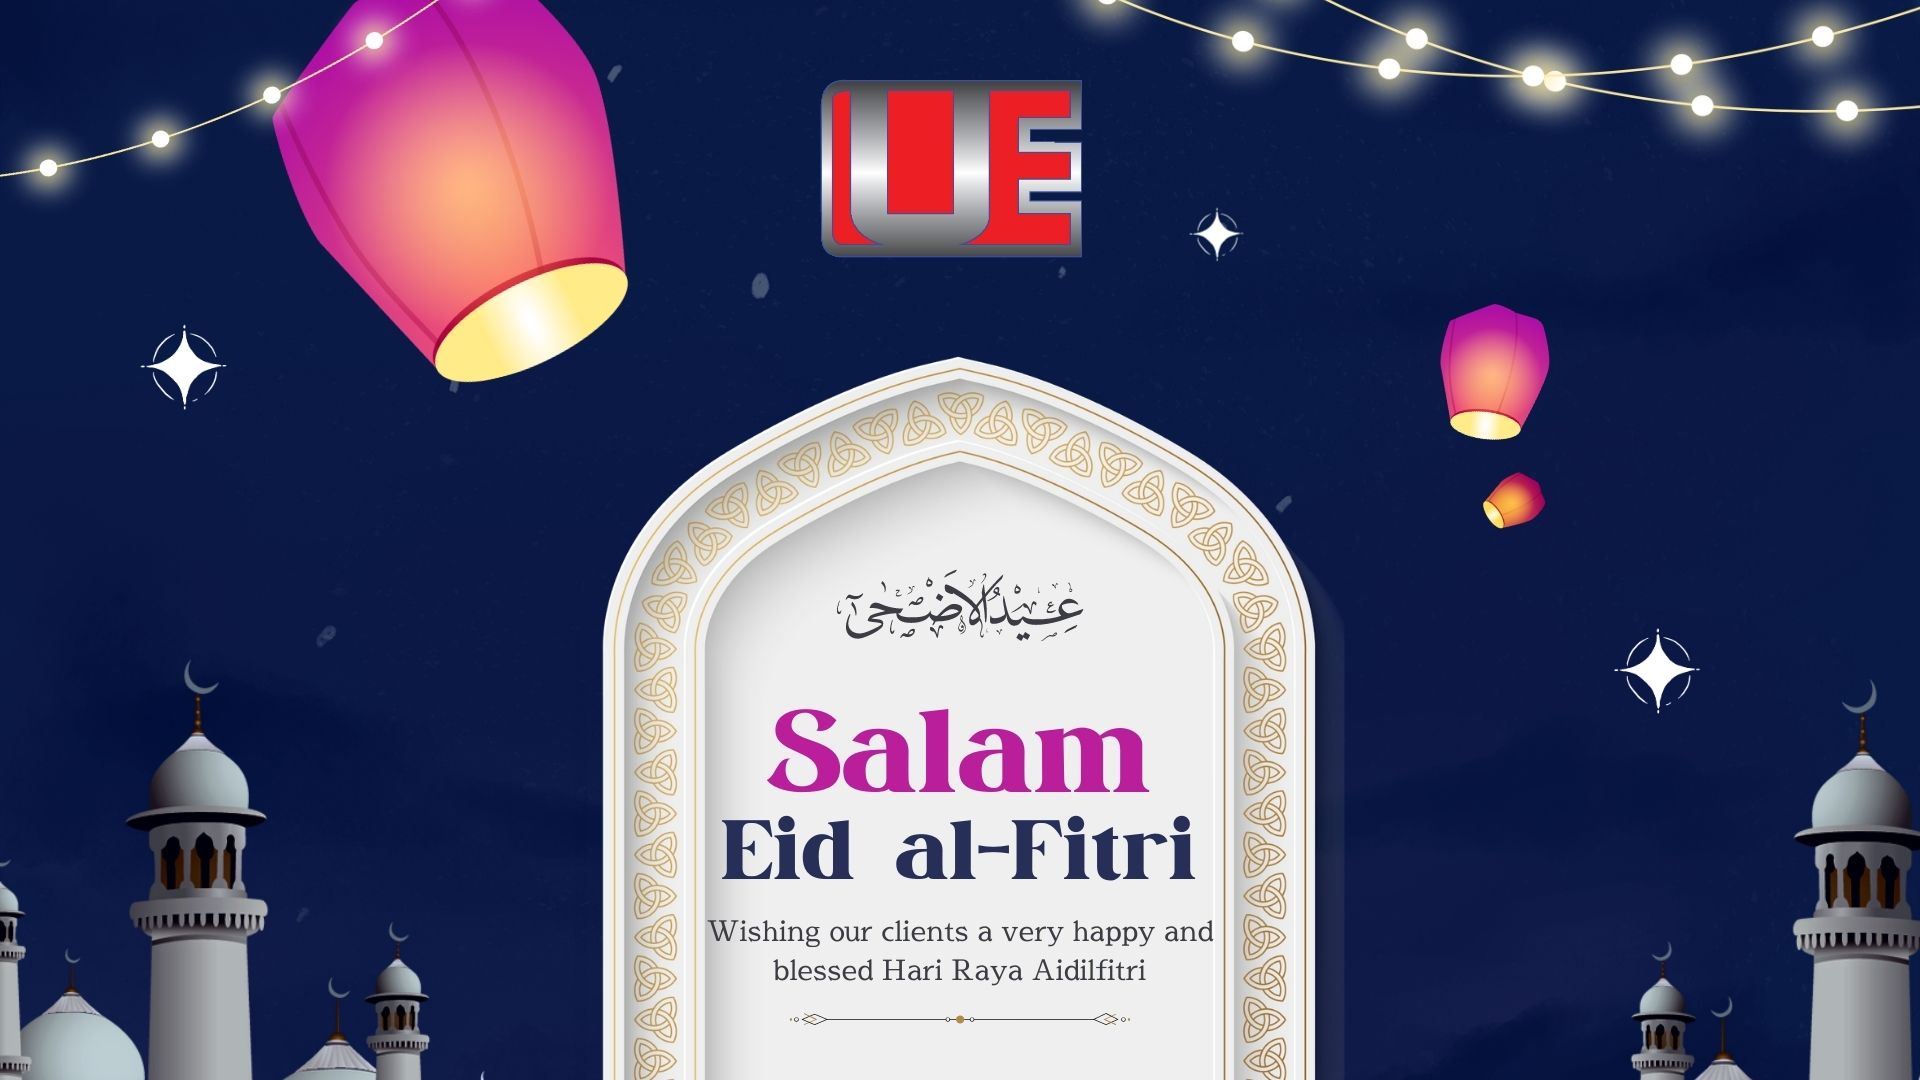 salam eid al-fitr from ultech engineering